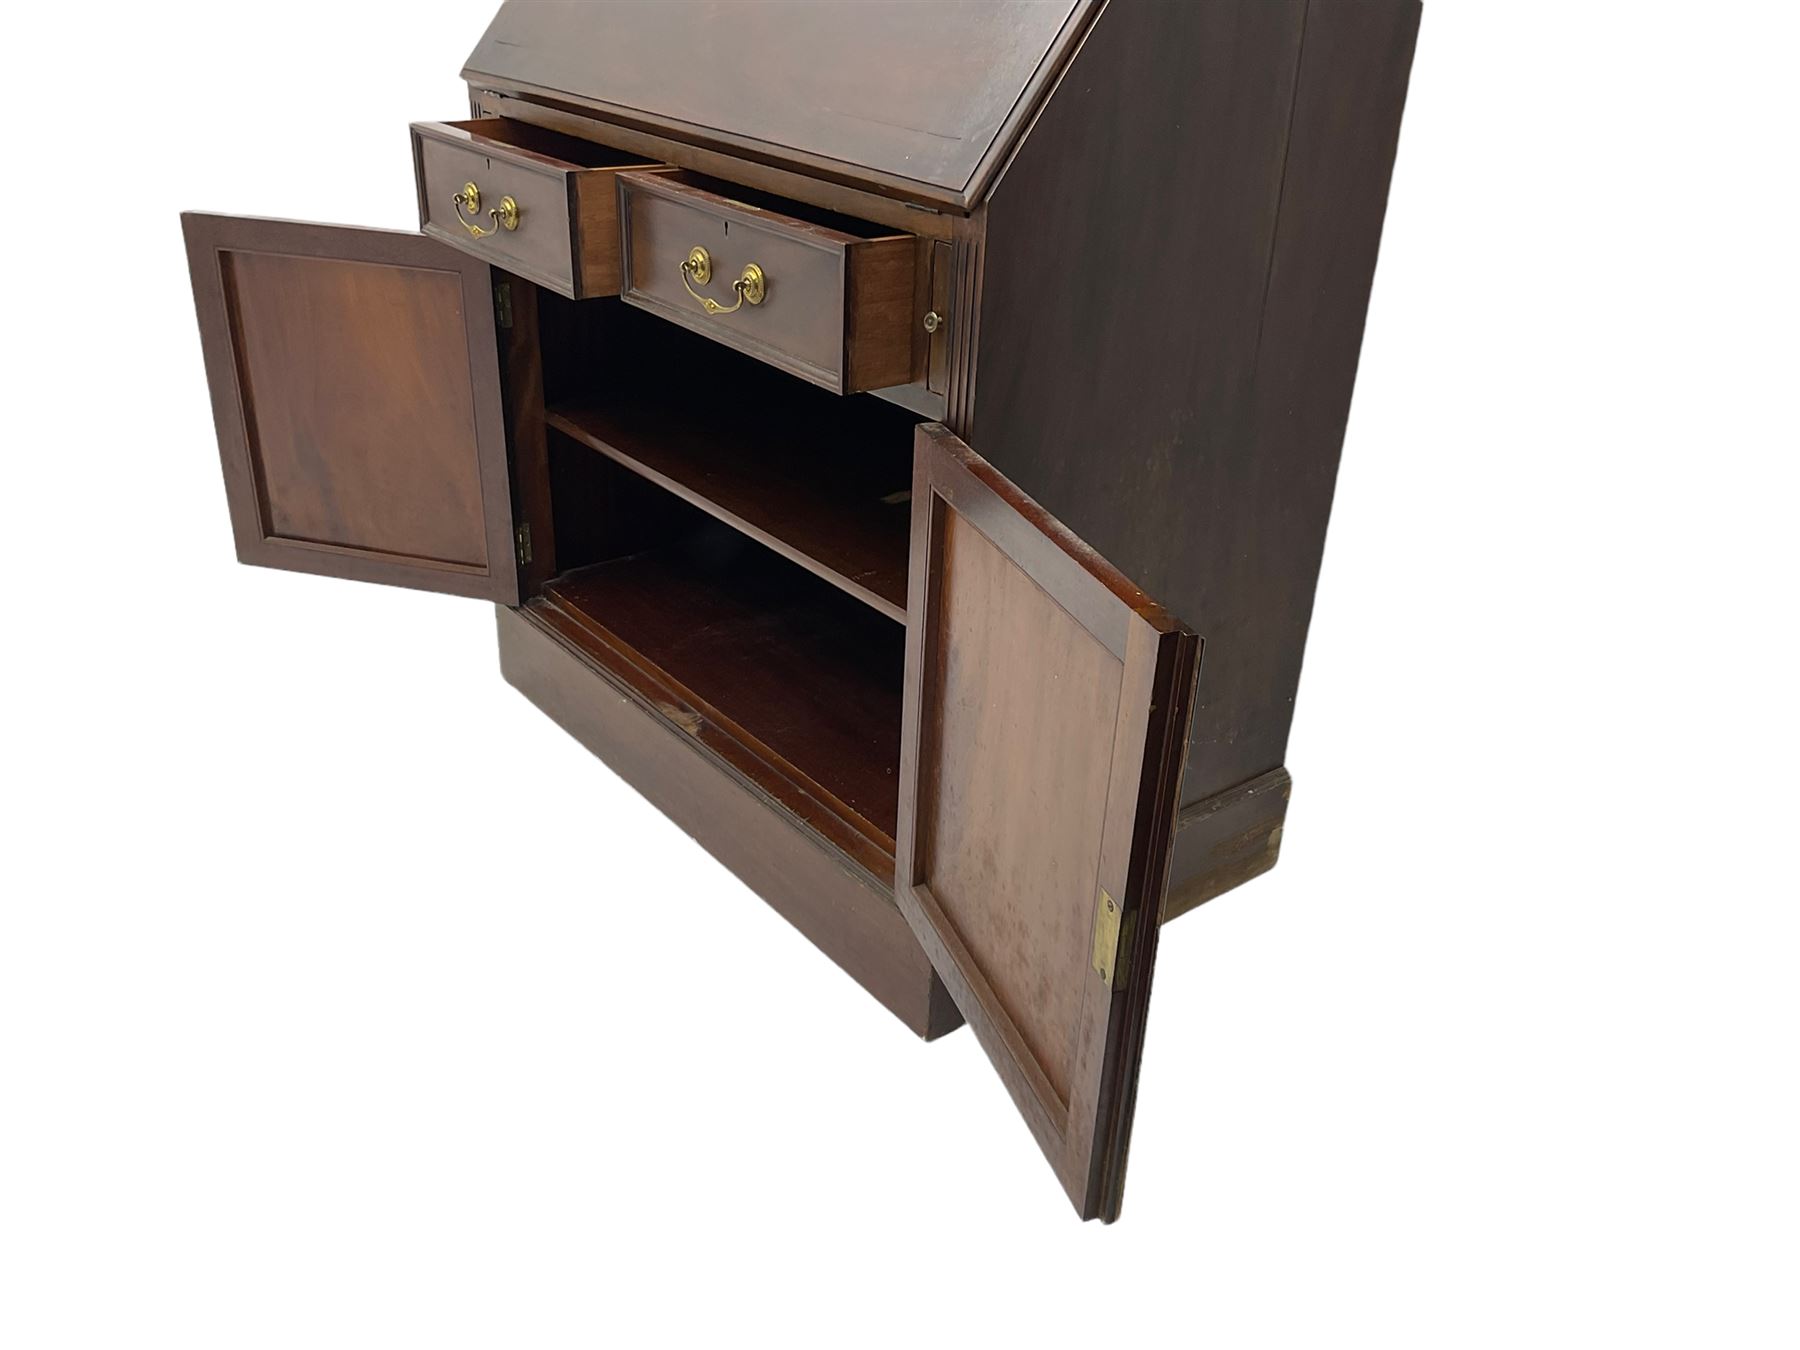 Late 19th century mahogany bureau bookcase - Image 4 of 5